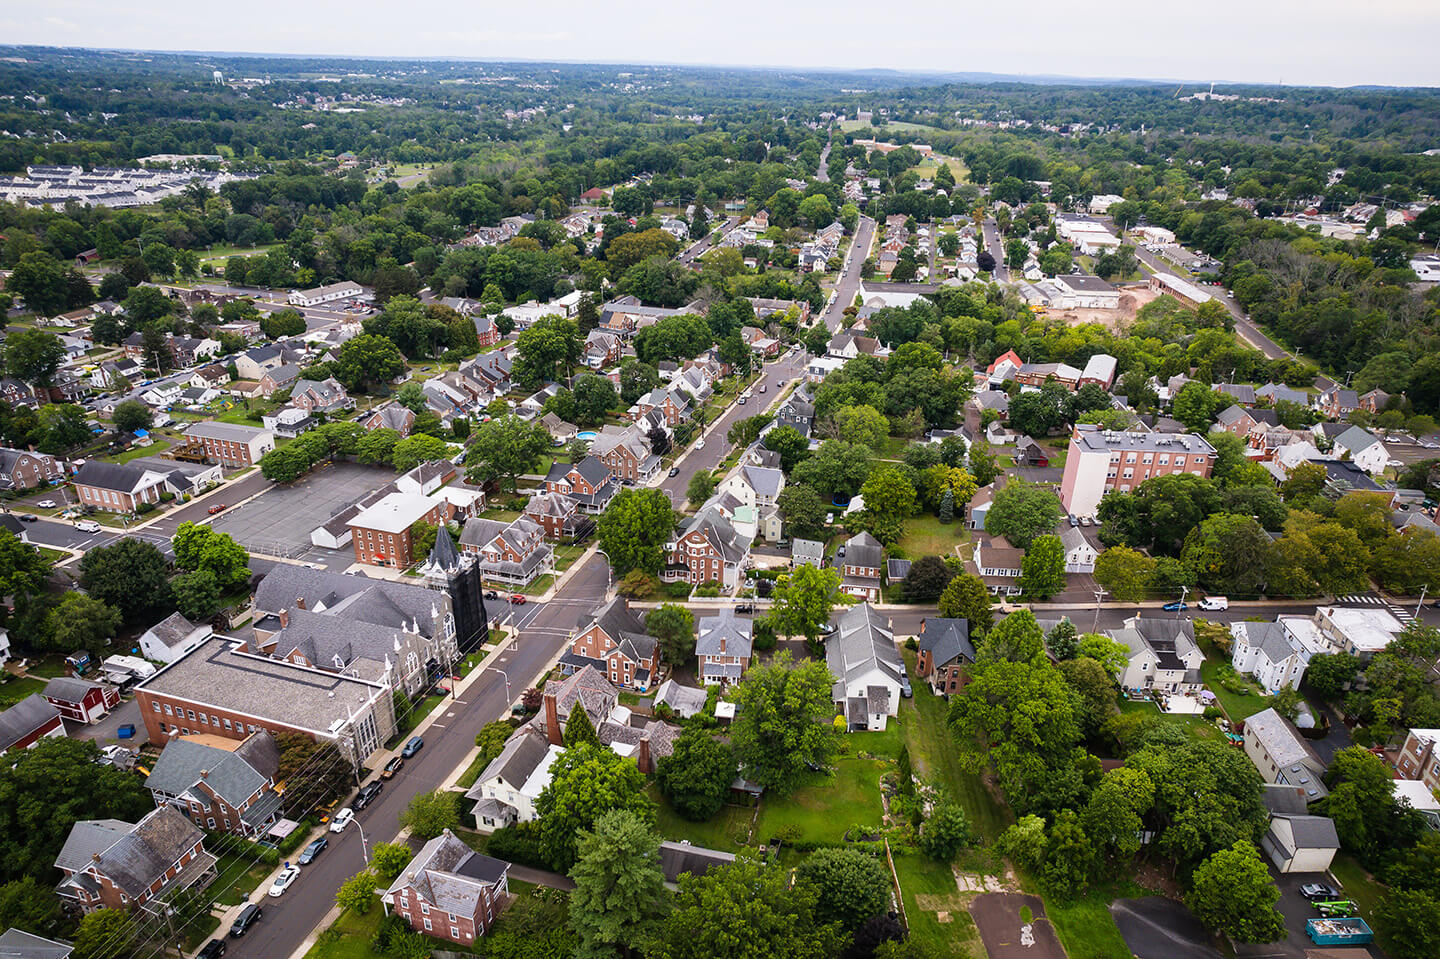 Aerial view of Delaware Valley, Pennsylvania